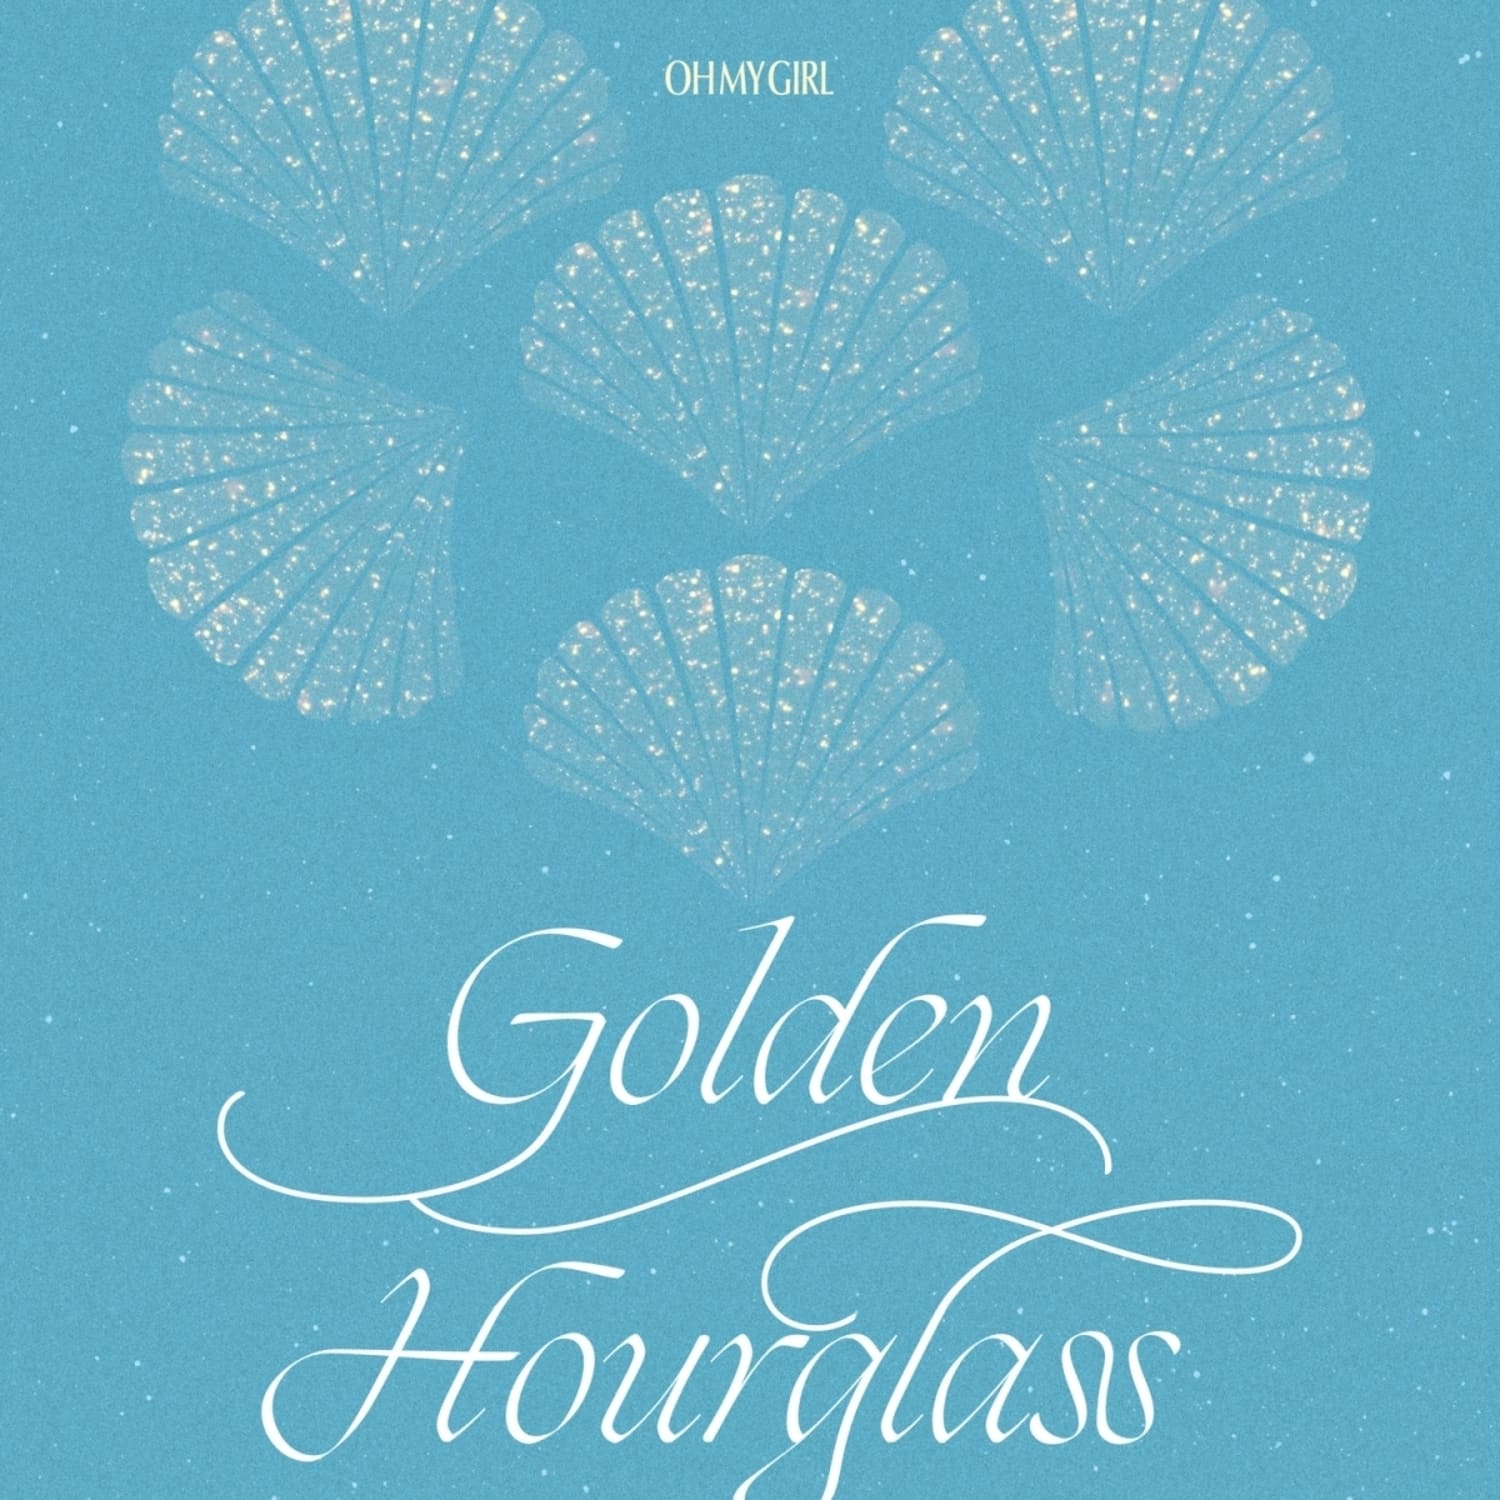 Oh My Girl - GOLDEN HOURGLASS